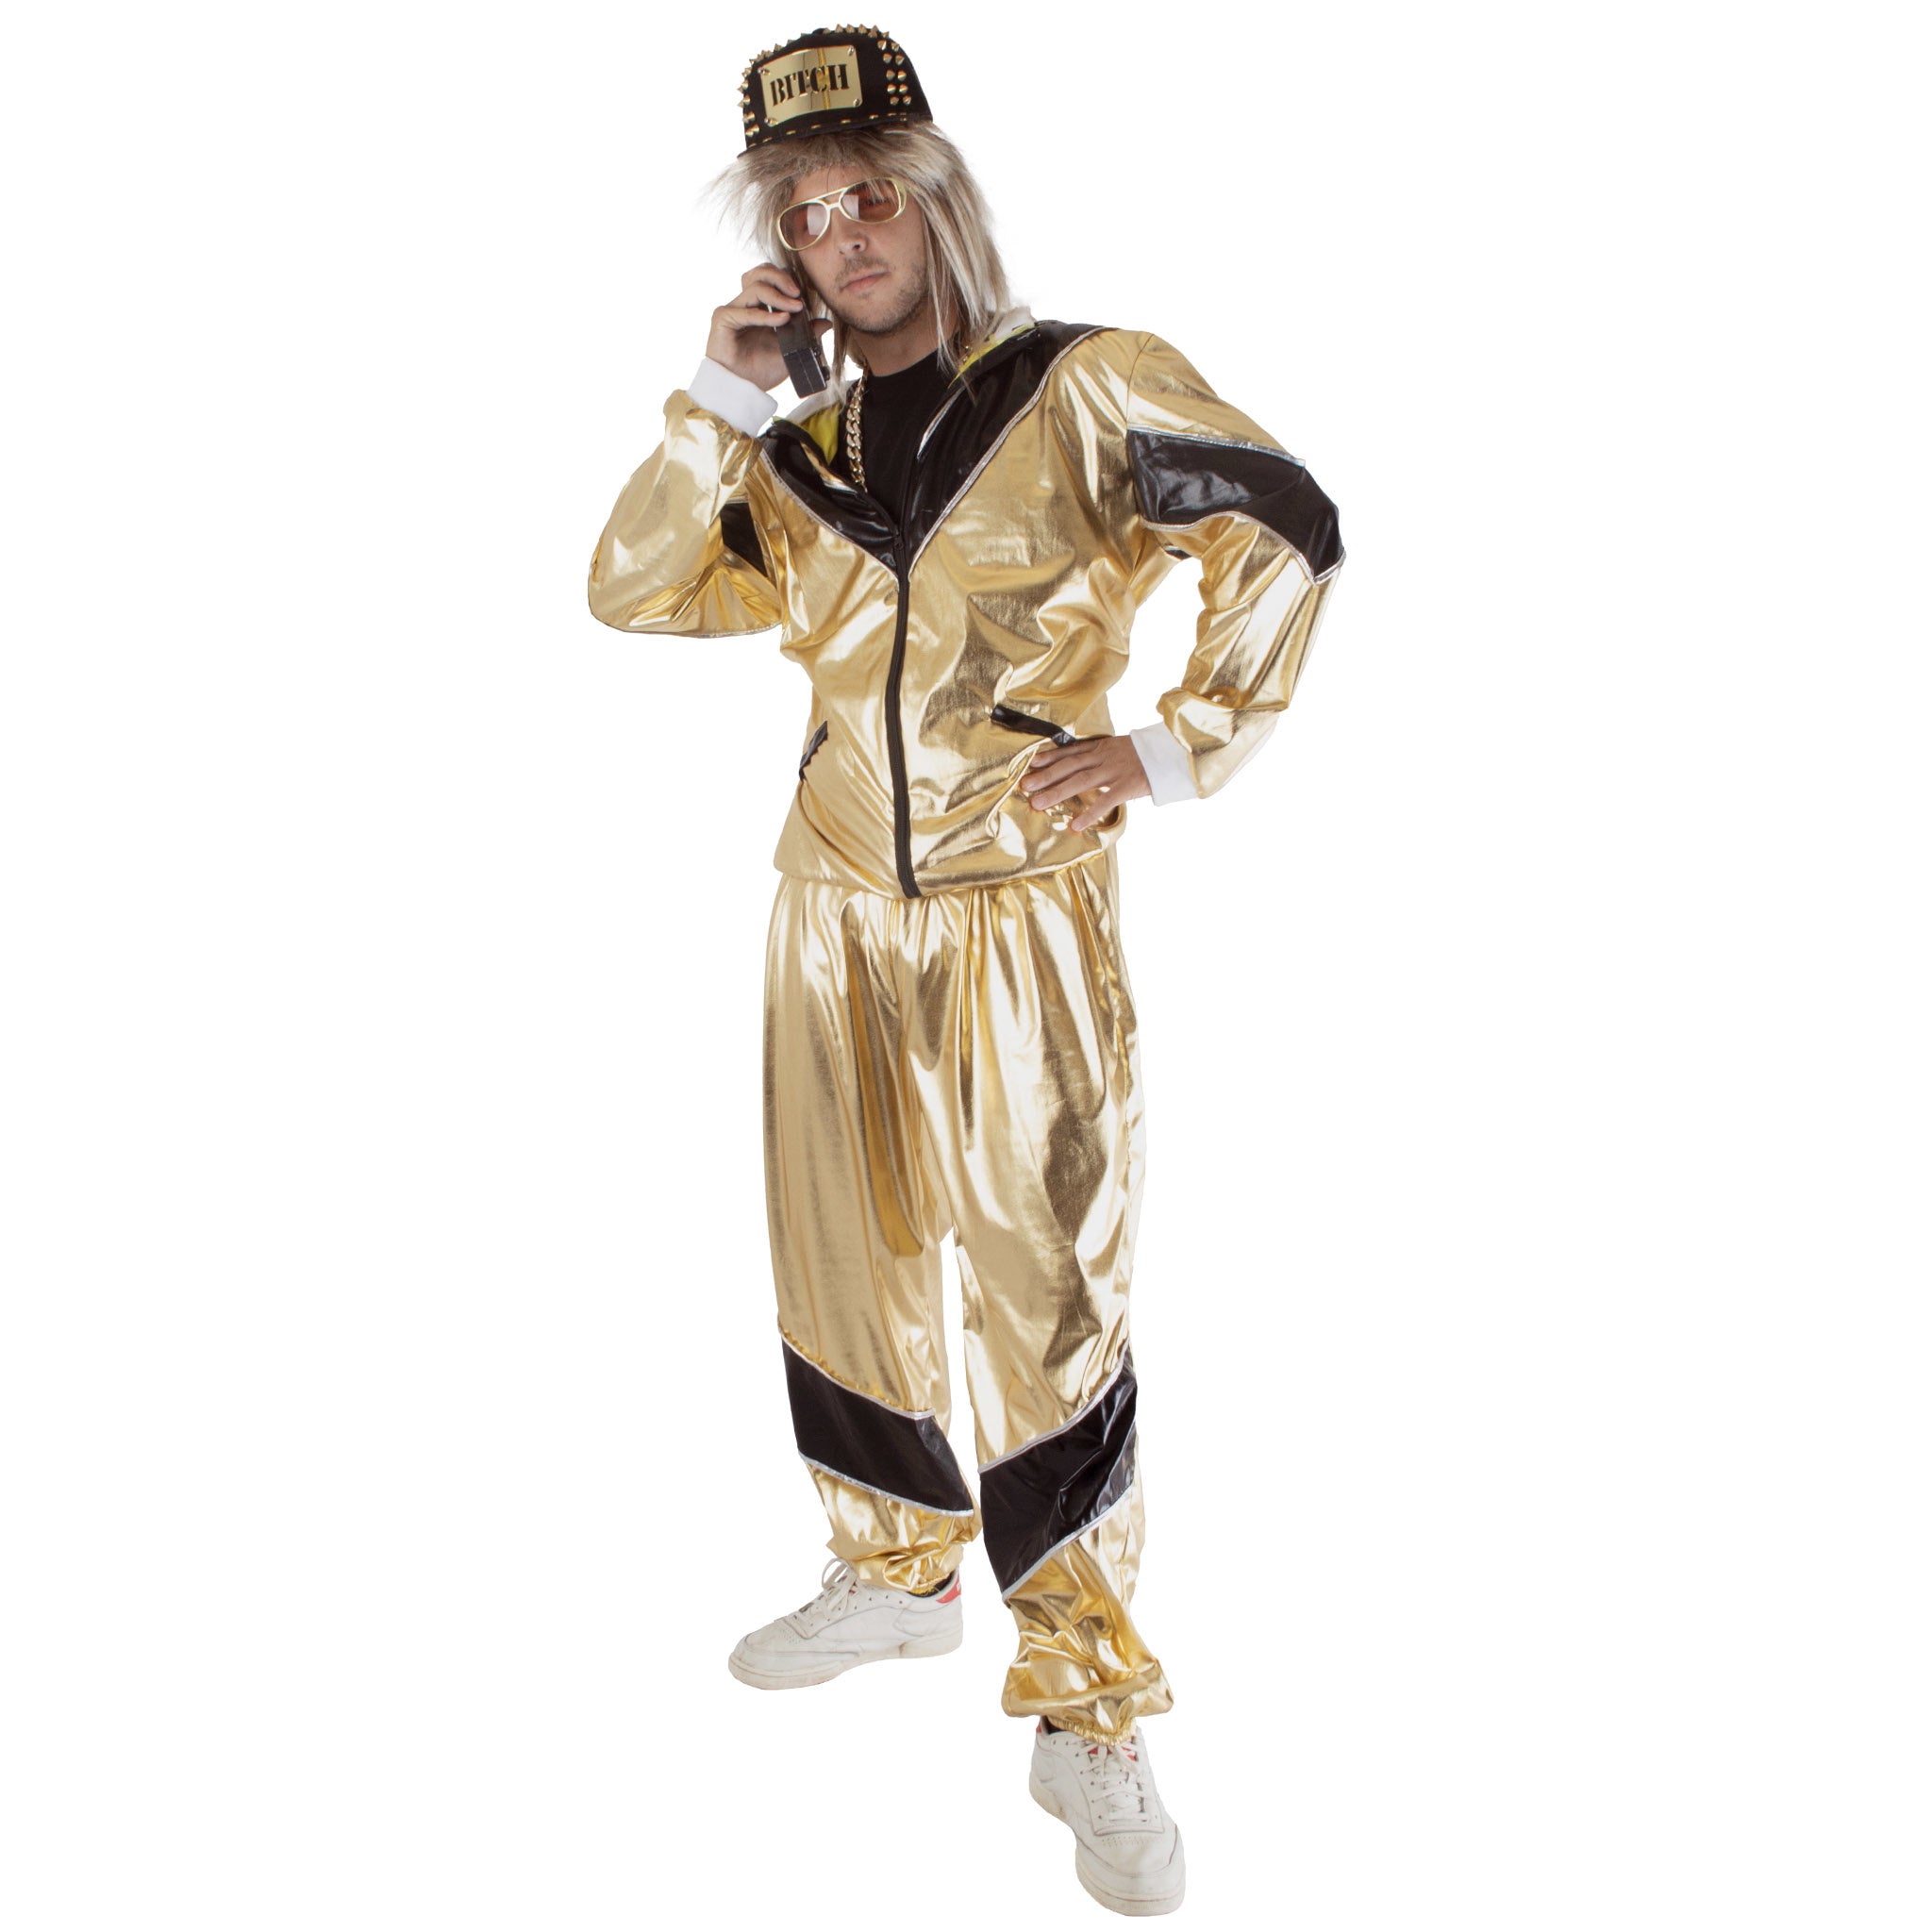 Funny Fashion - Grappig & Fout Kostuum - Wout Fout Goud - Man - zwart,goud - Maat 48-50 - Carnavalskleding - Verkleedkleding